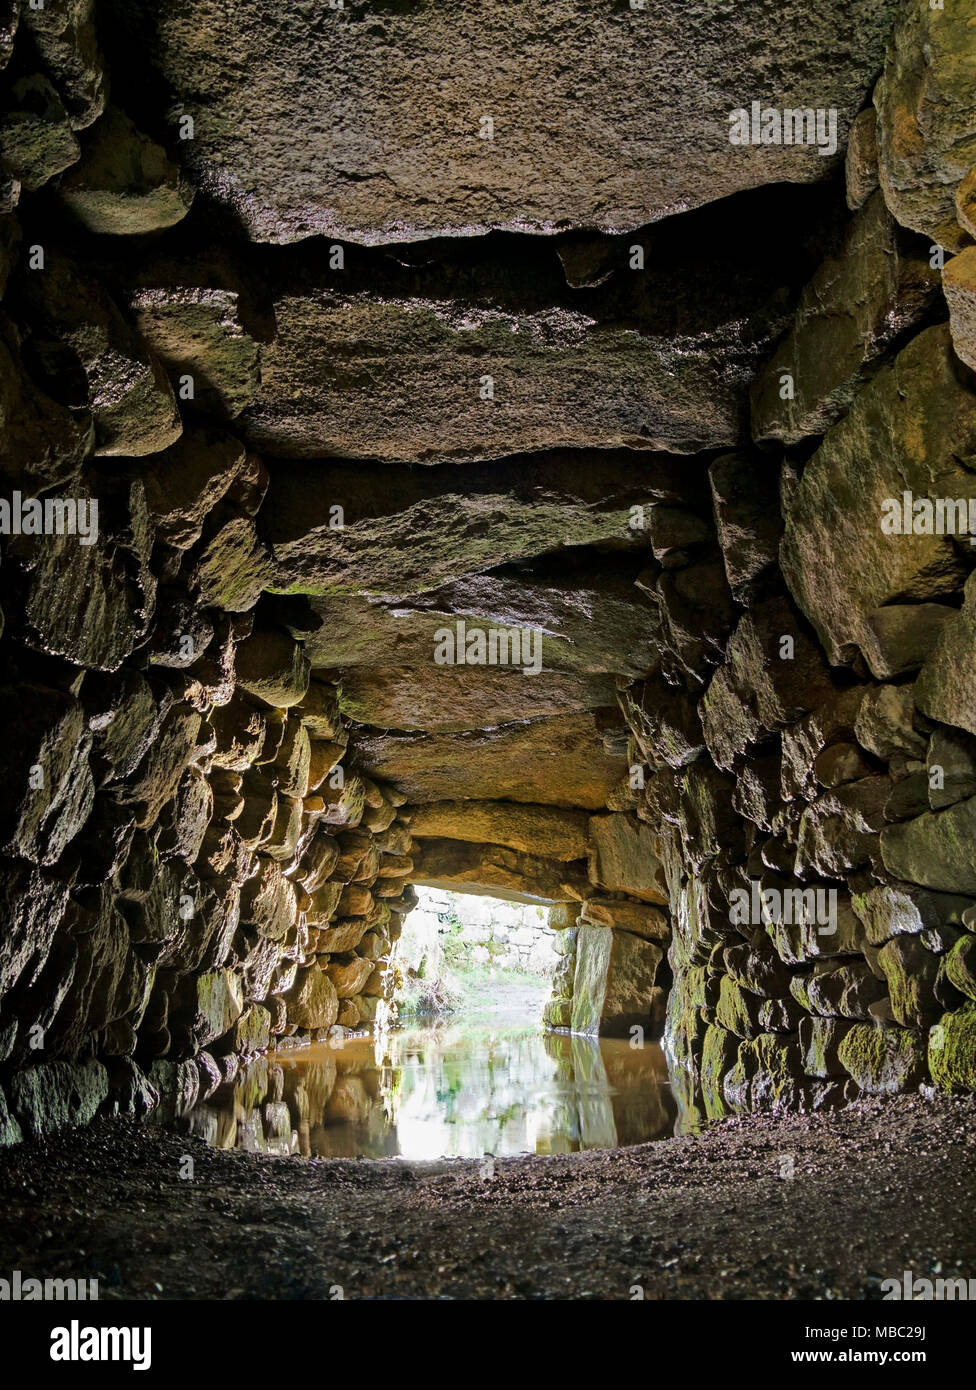 Carn Euny (Hendre Chapeluni) Fogou ancient iron age stone lined underground tunnel / passage, Sancreed, Cornwall, England, UK. Stock Photo